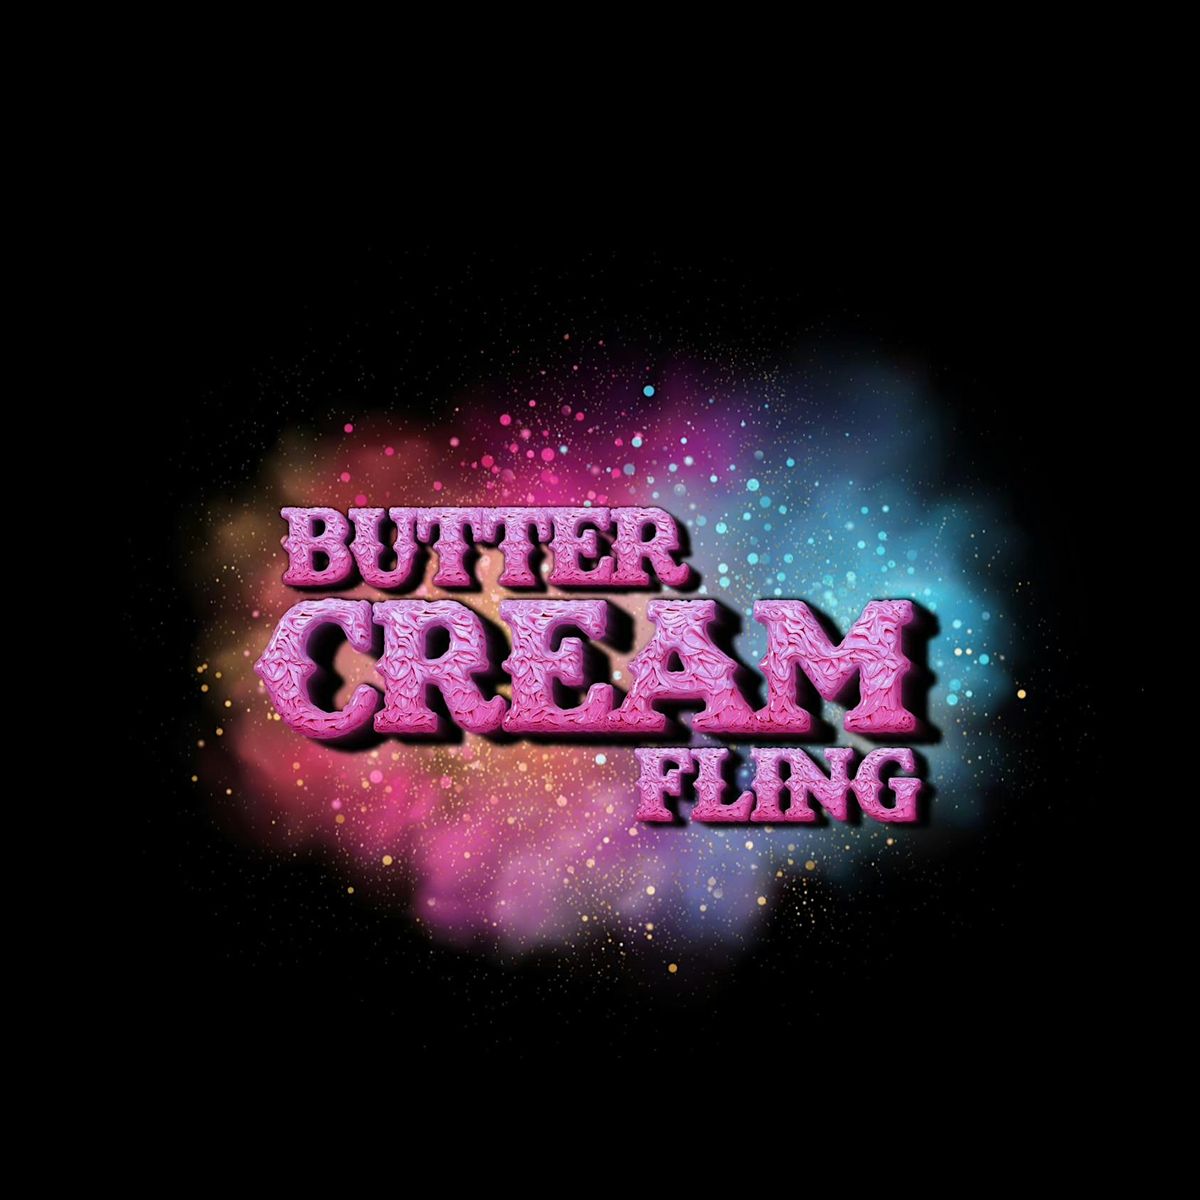 Buttercream Fling